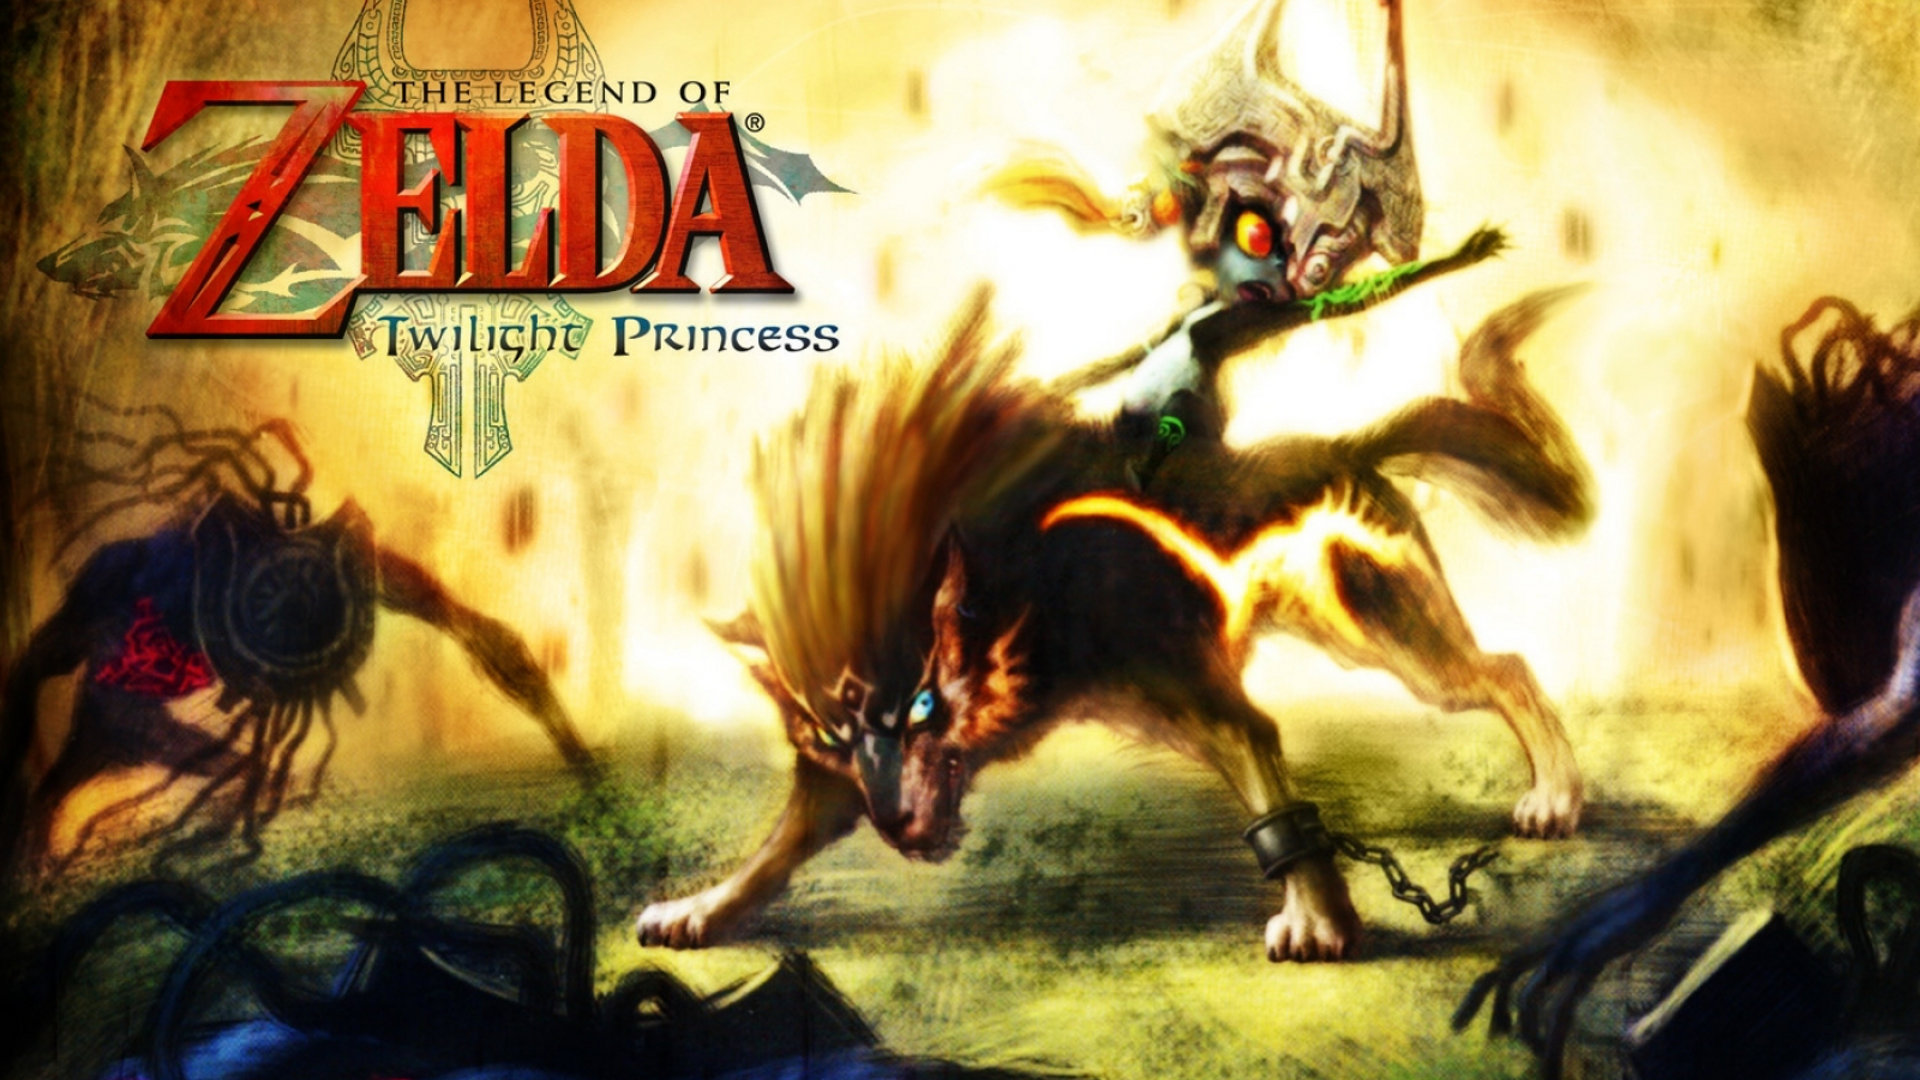 the legend of zelda twilight princess free download for pc